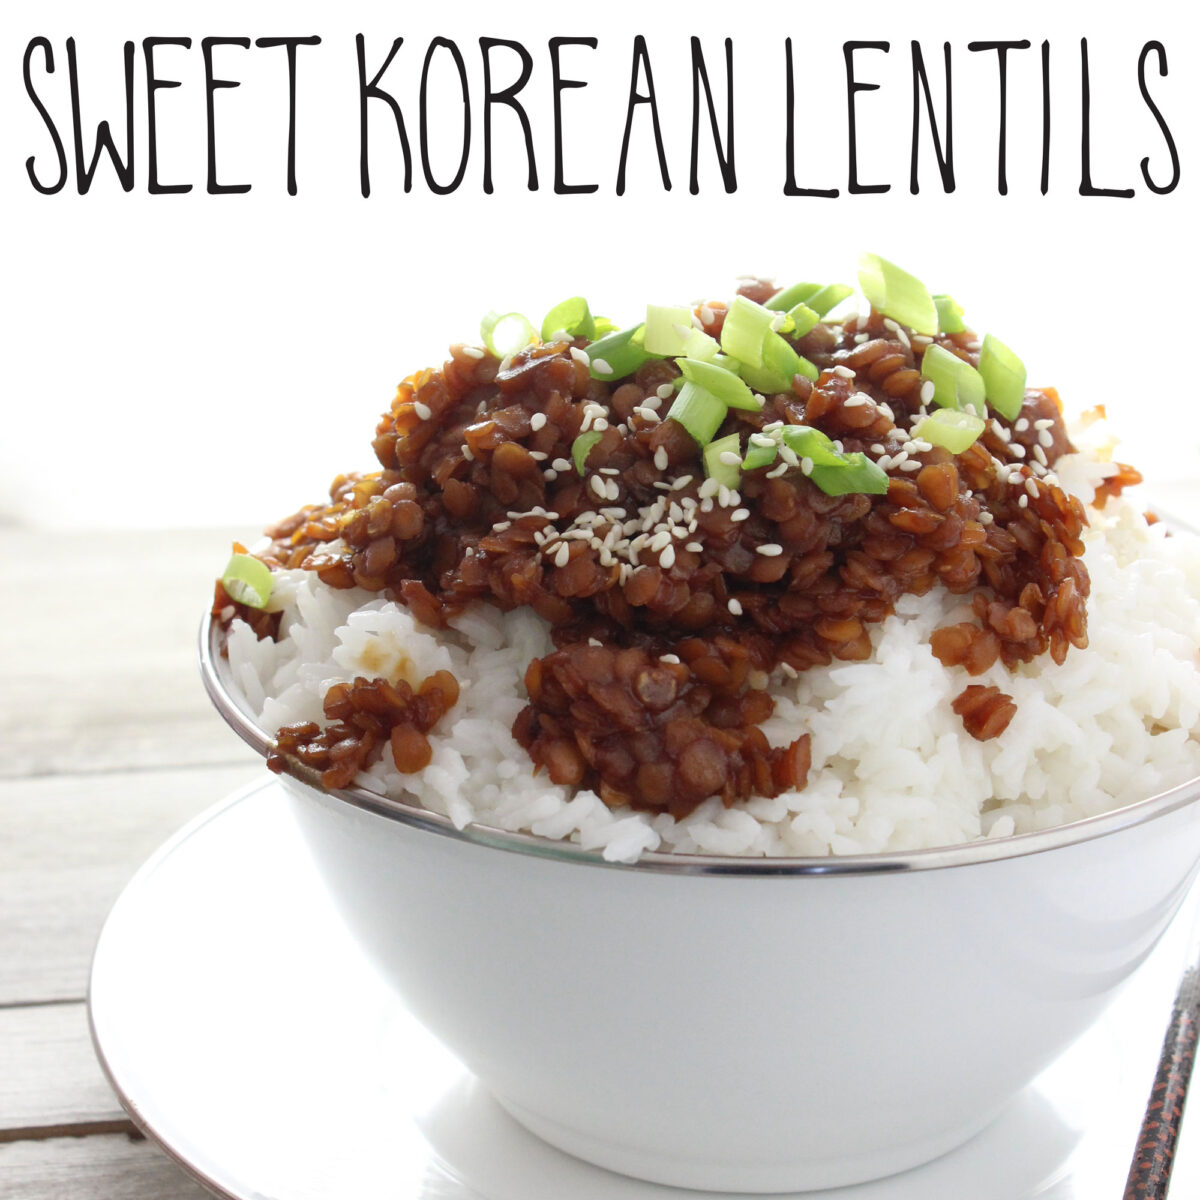 Sweet Korean Lentils